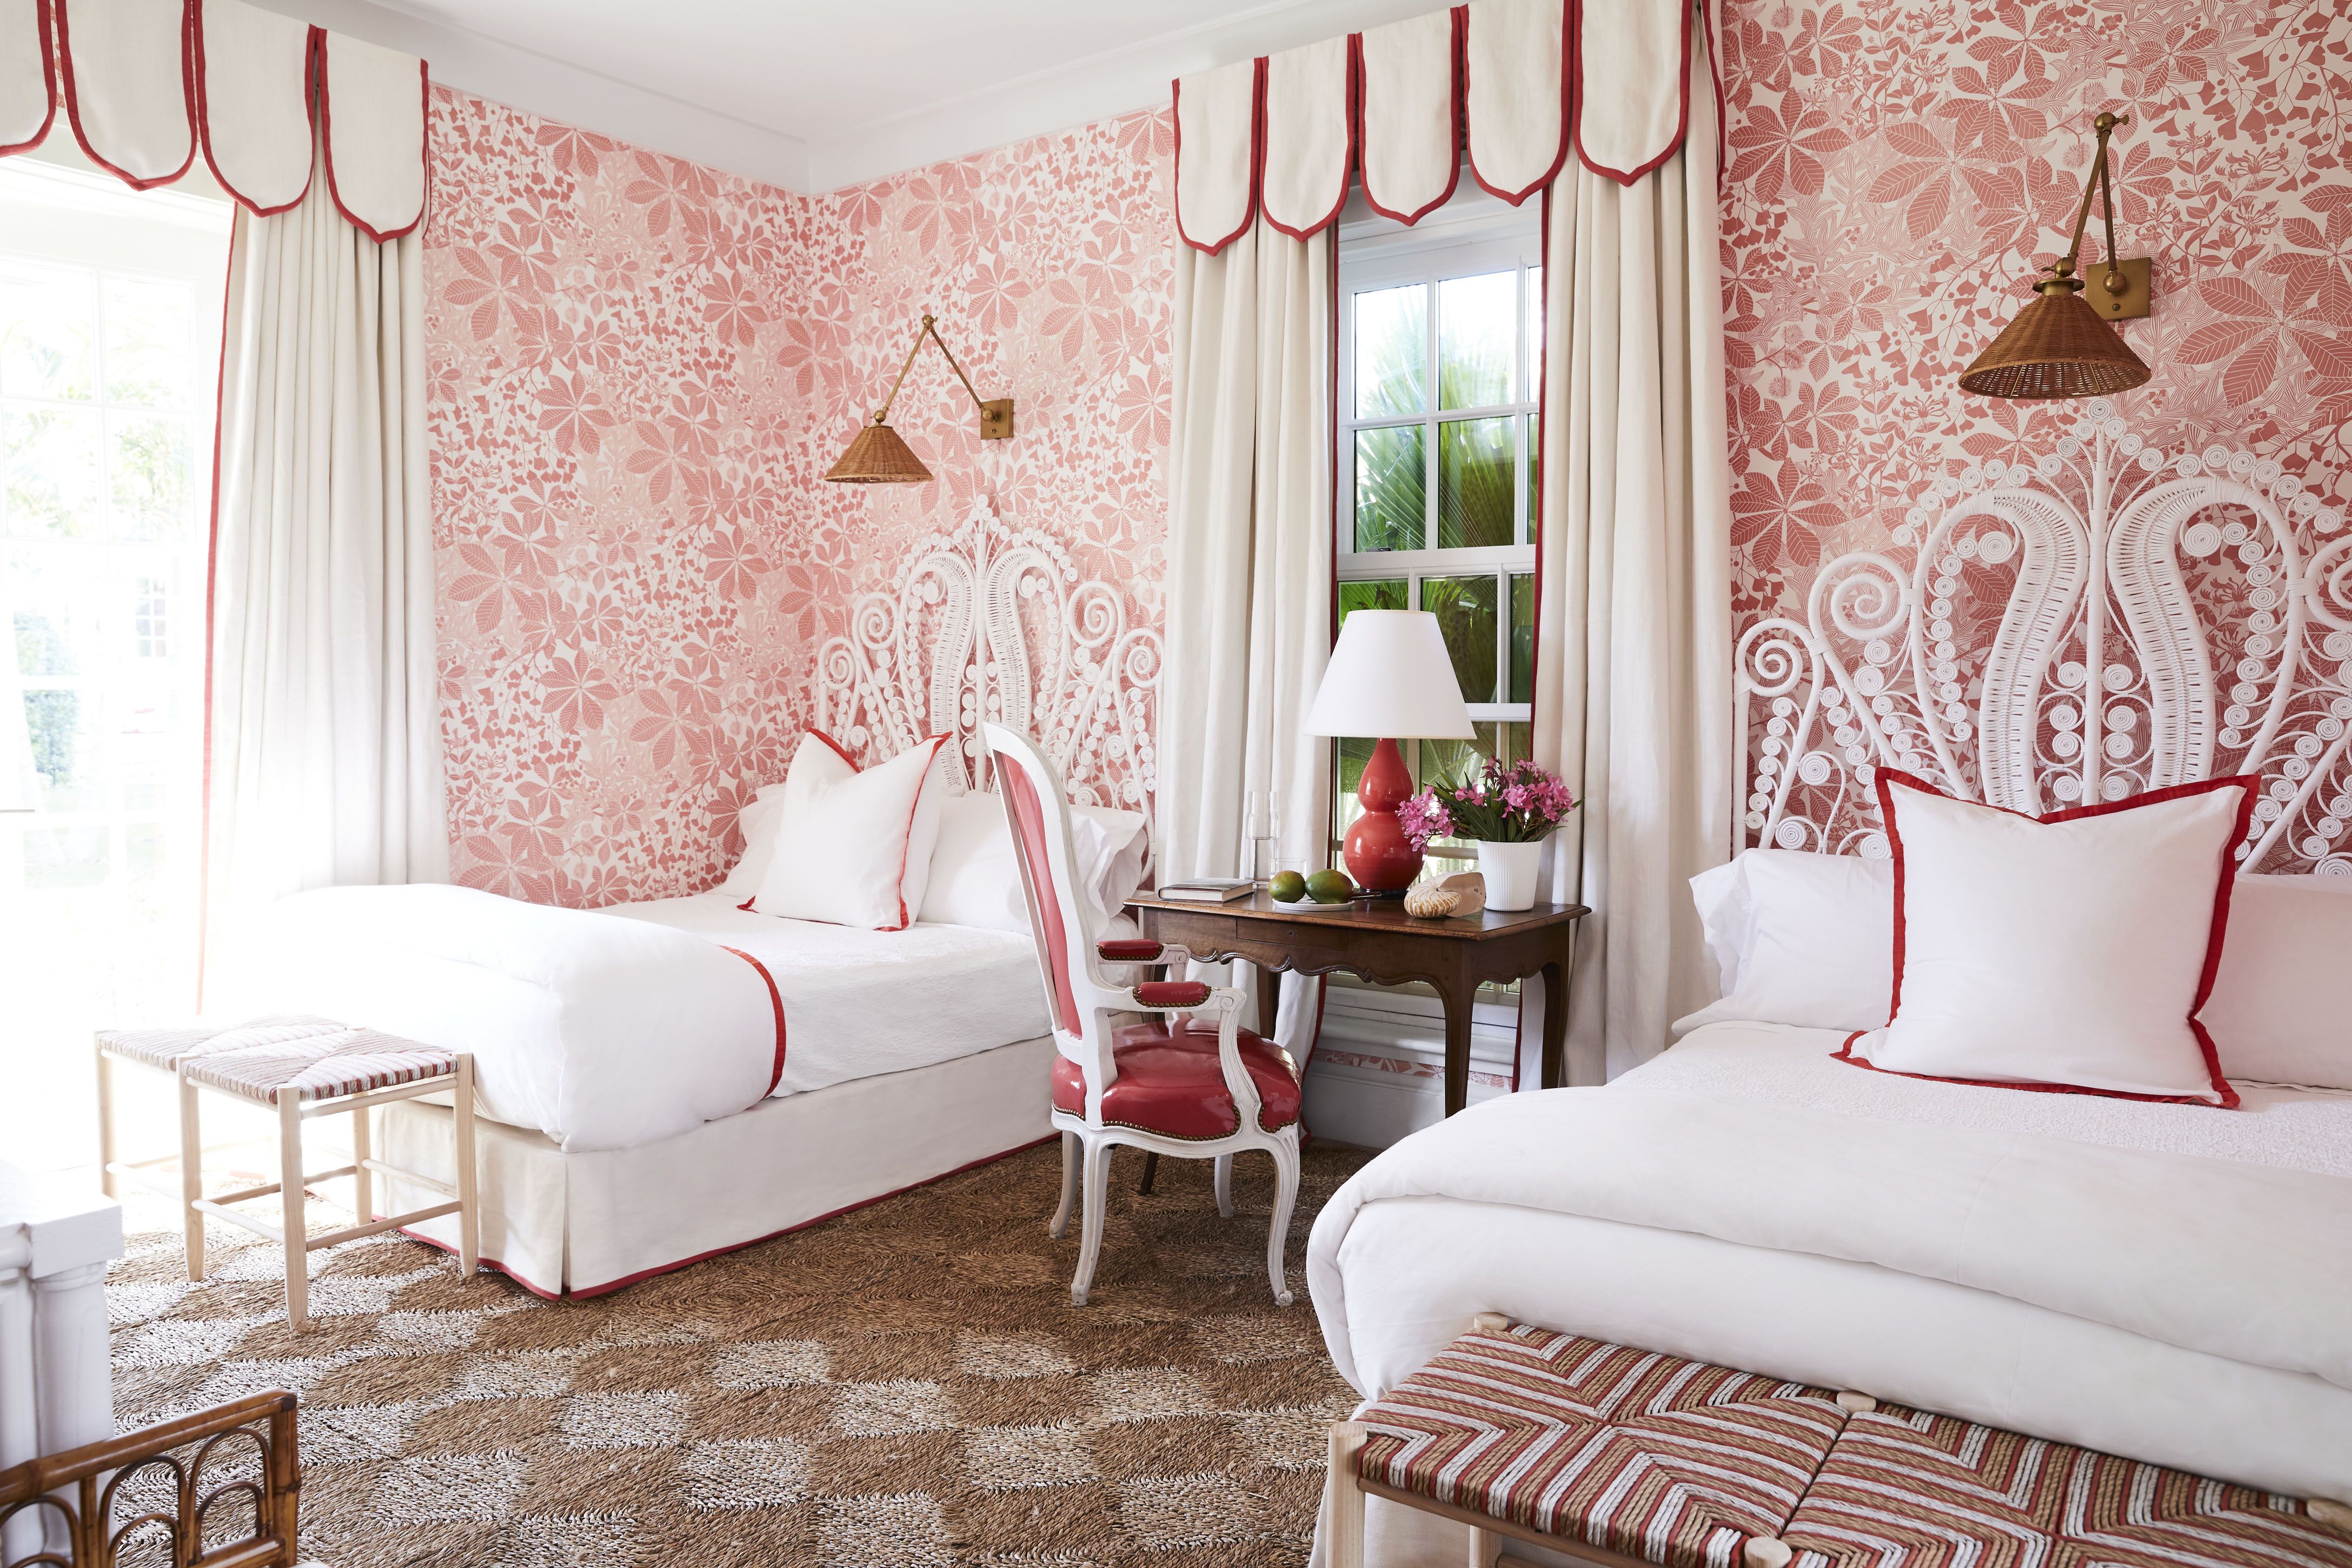 The Best 5 Pink Paint Colors  Home decor bedroom, Pink bedroom walls, Pink  living room